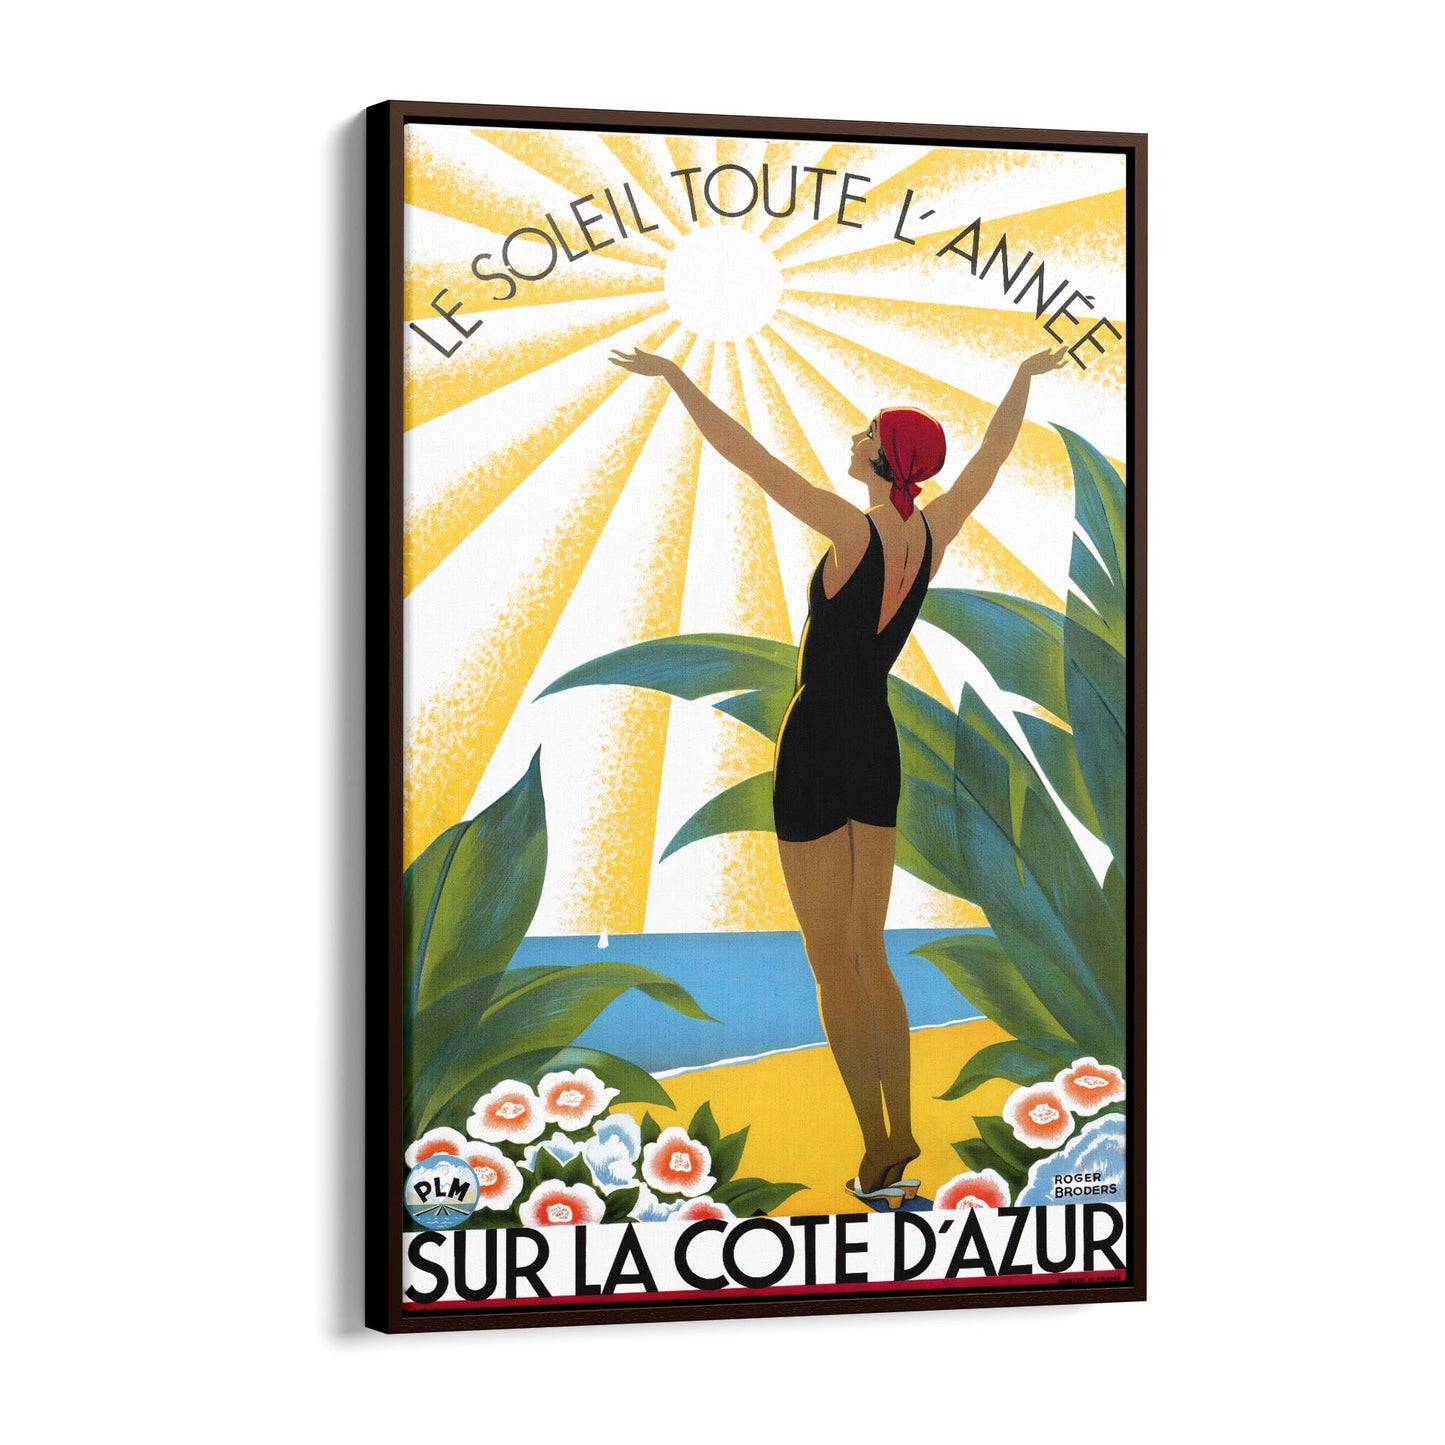 Cote d'Azur Poster - "Le Soleil Toute L'Annee" by Roger Broders | Framed Canvas Vintage Travel Advertisement